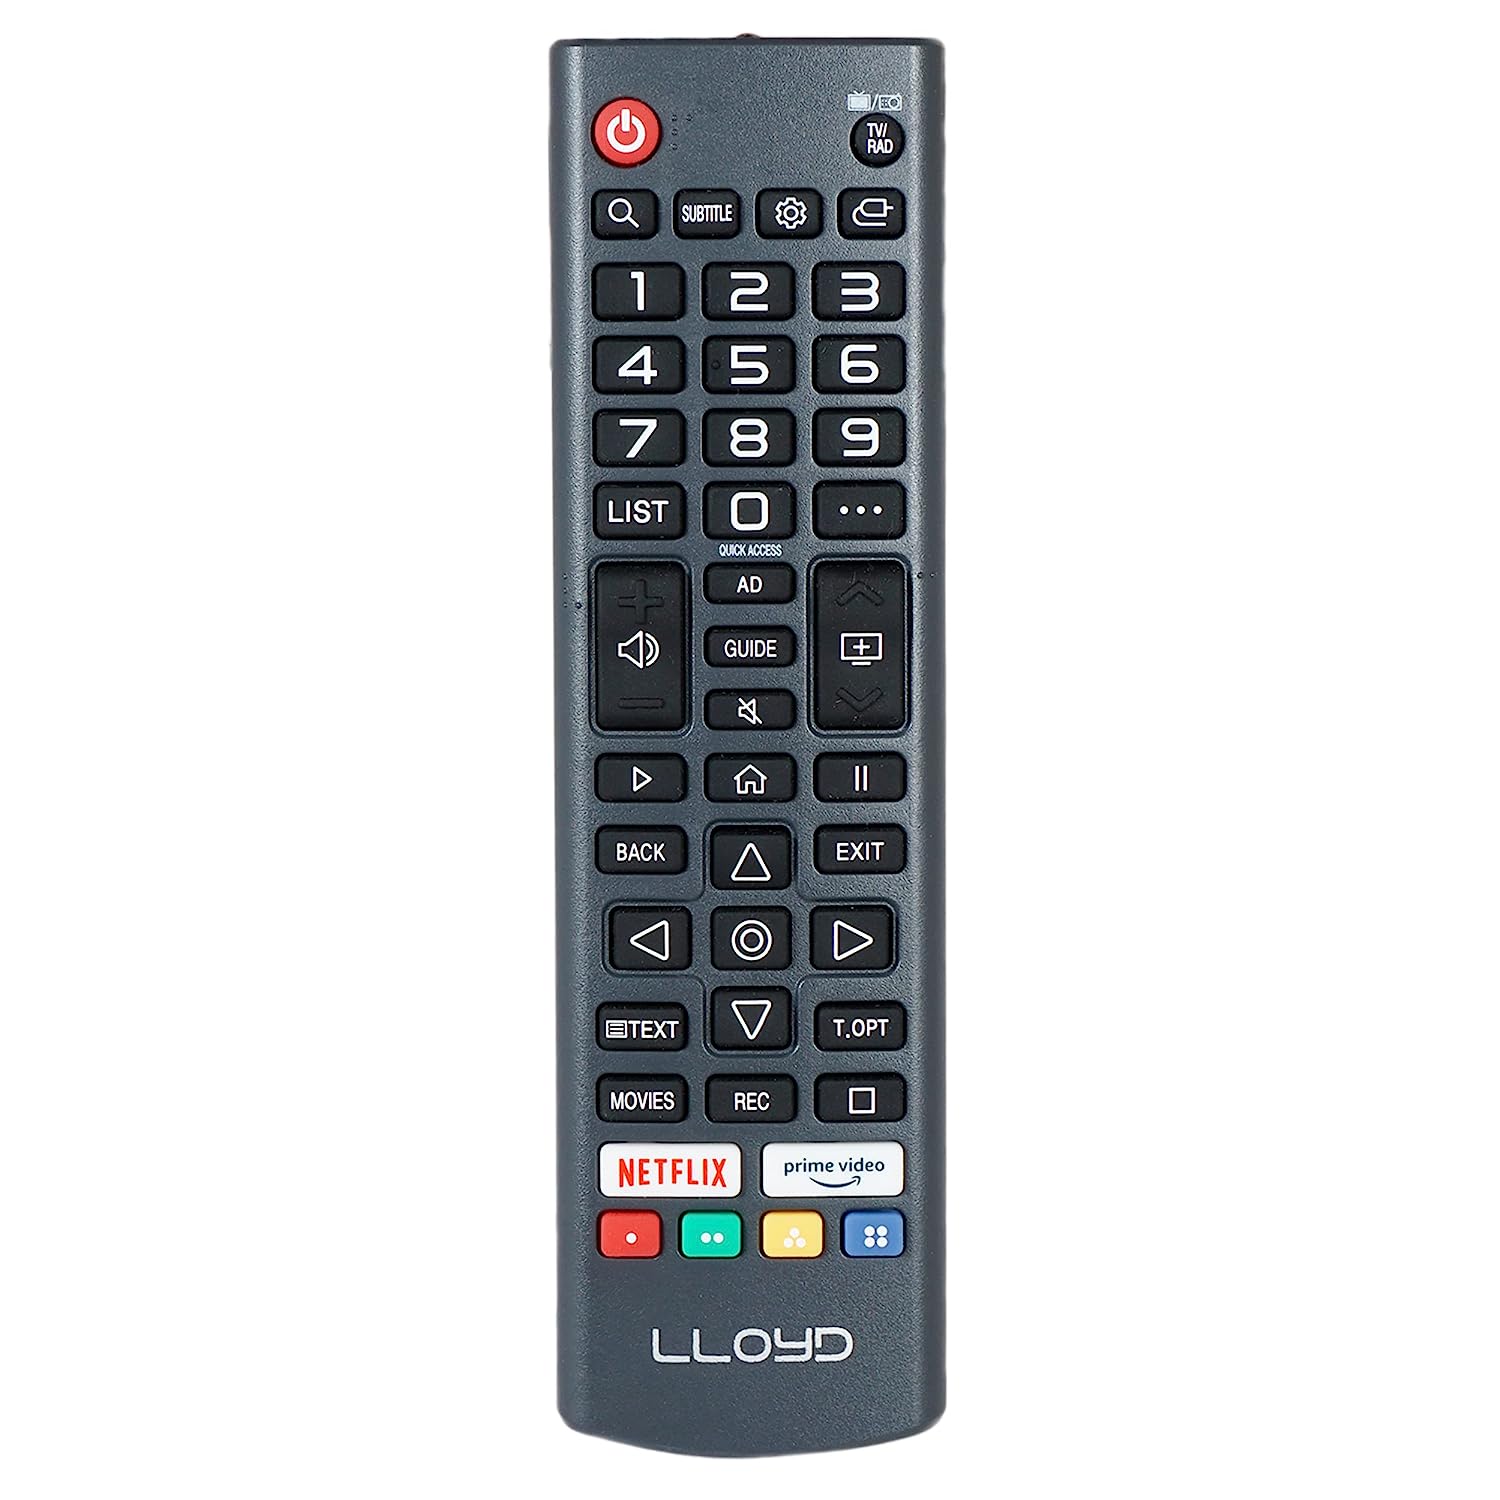 Lloyd 32HS550F 80cm (32 Inches) HD Ready Smart Web OS LED TV (Black) Mahajan Electronics Online